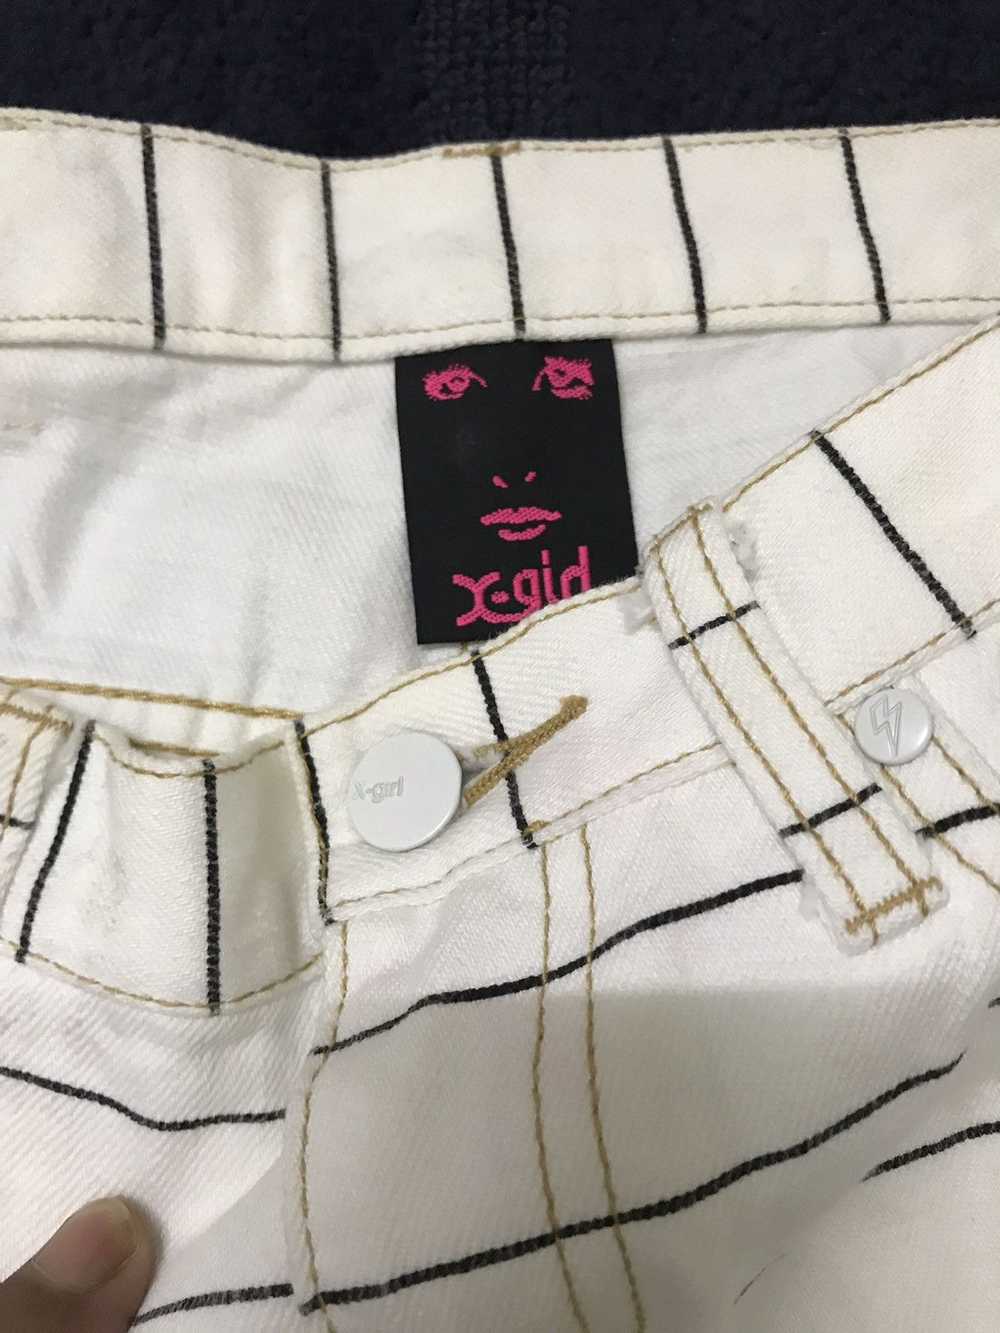 Japanese Brand Japanese Brand X-Girl Striped Jeans - image 6